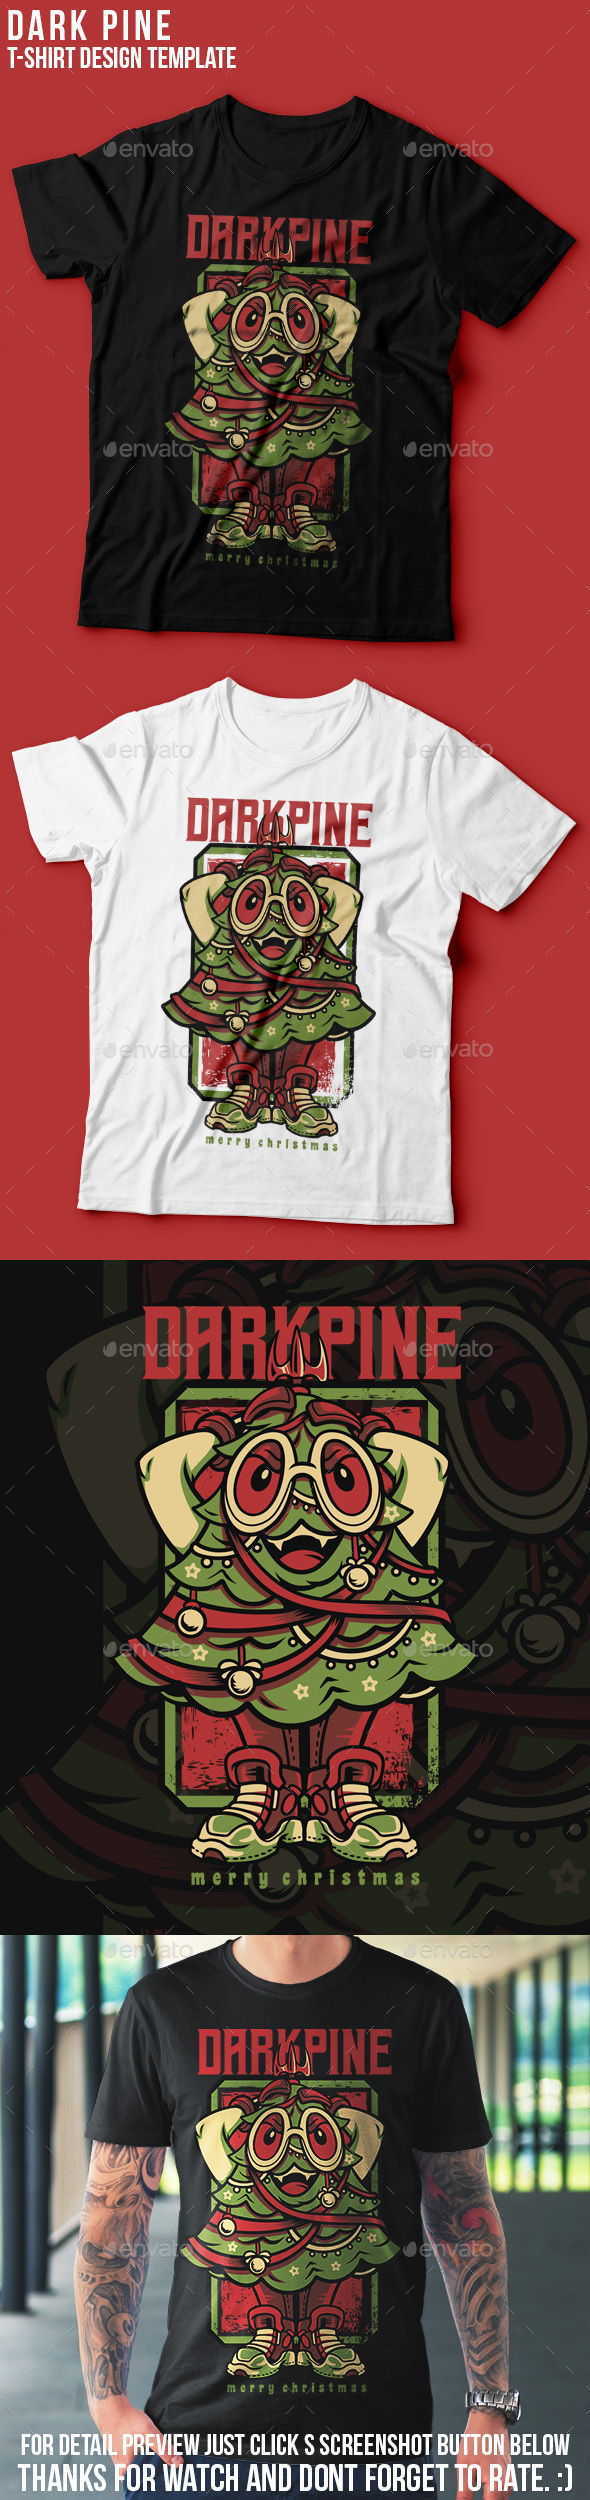 [DOWNLOAD]Dark Pine Happy Christmas T-Shirt Design